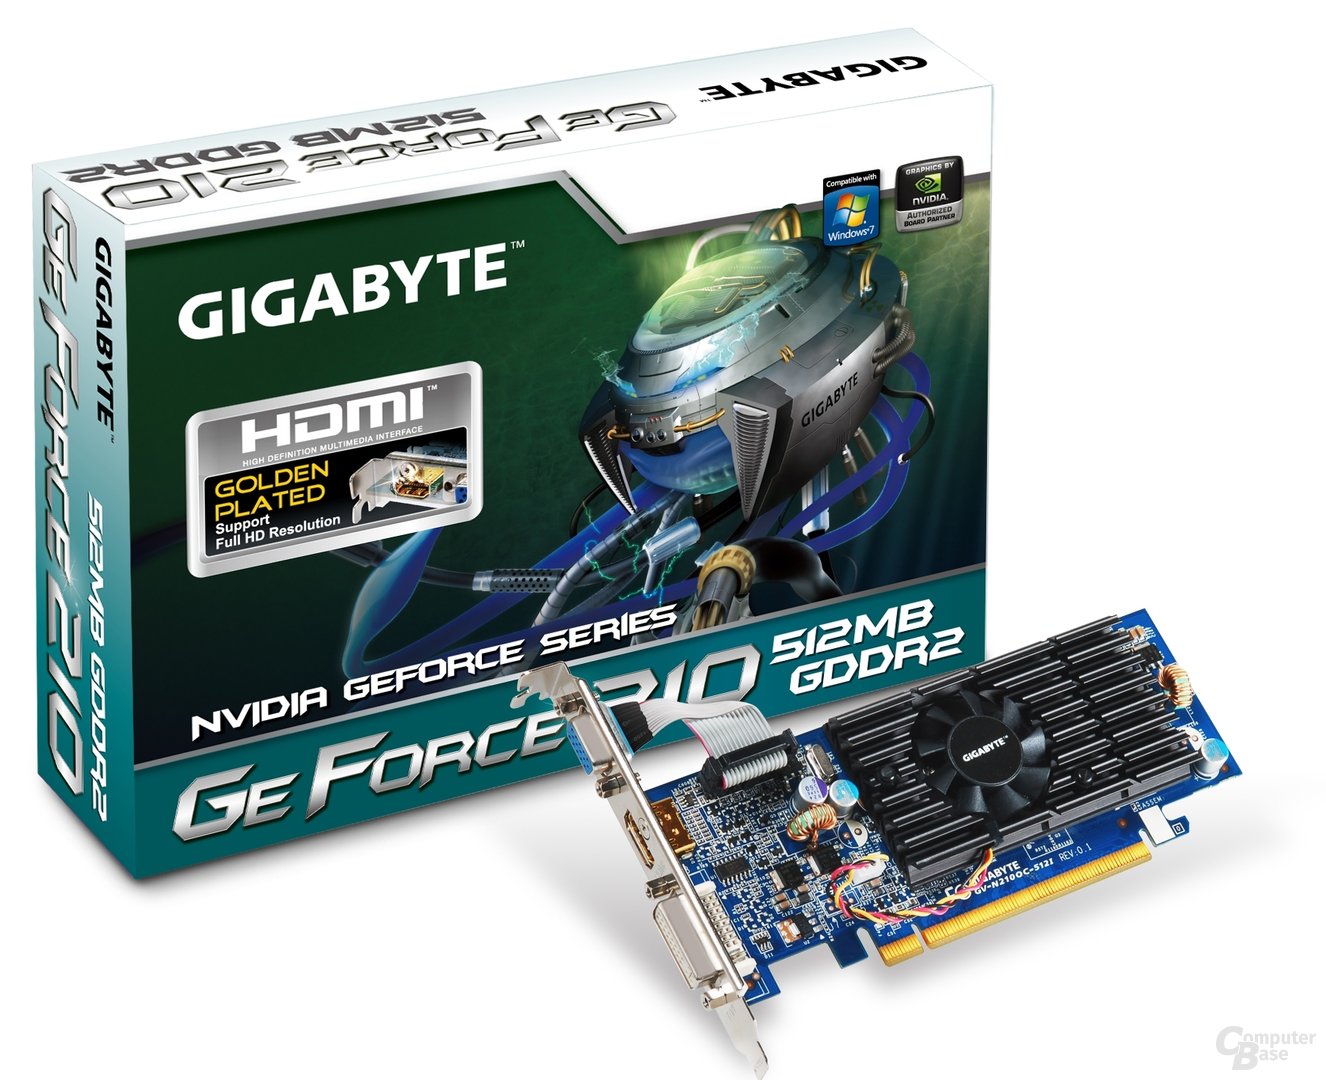 Gigabyte GeForce 210